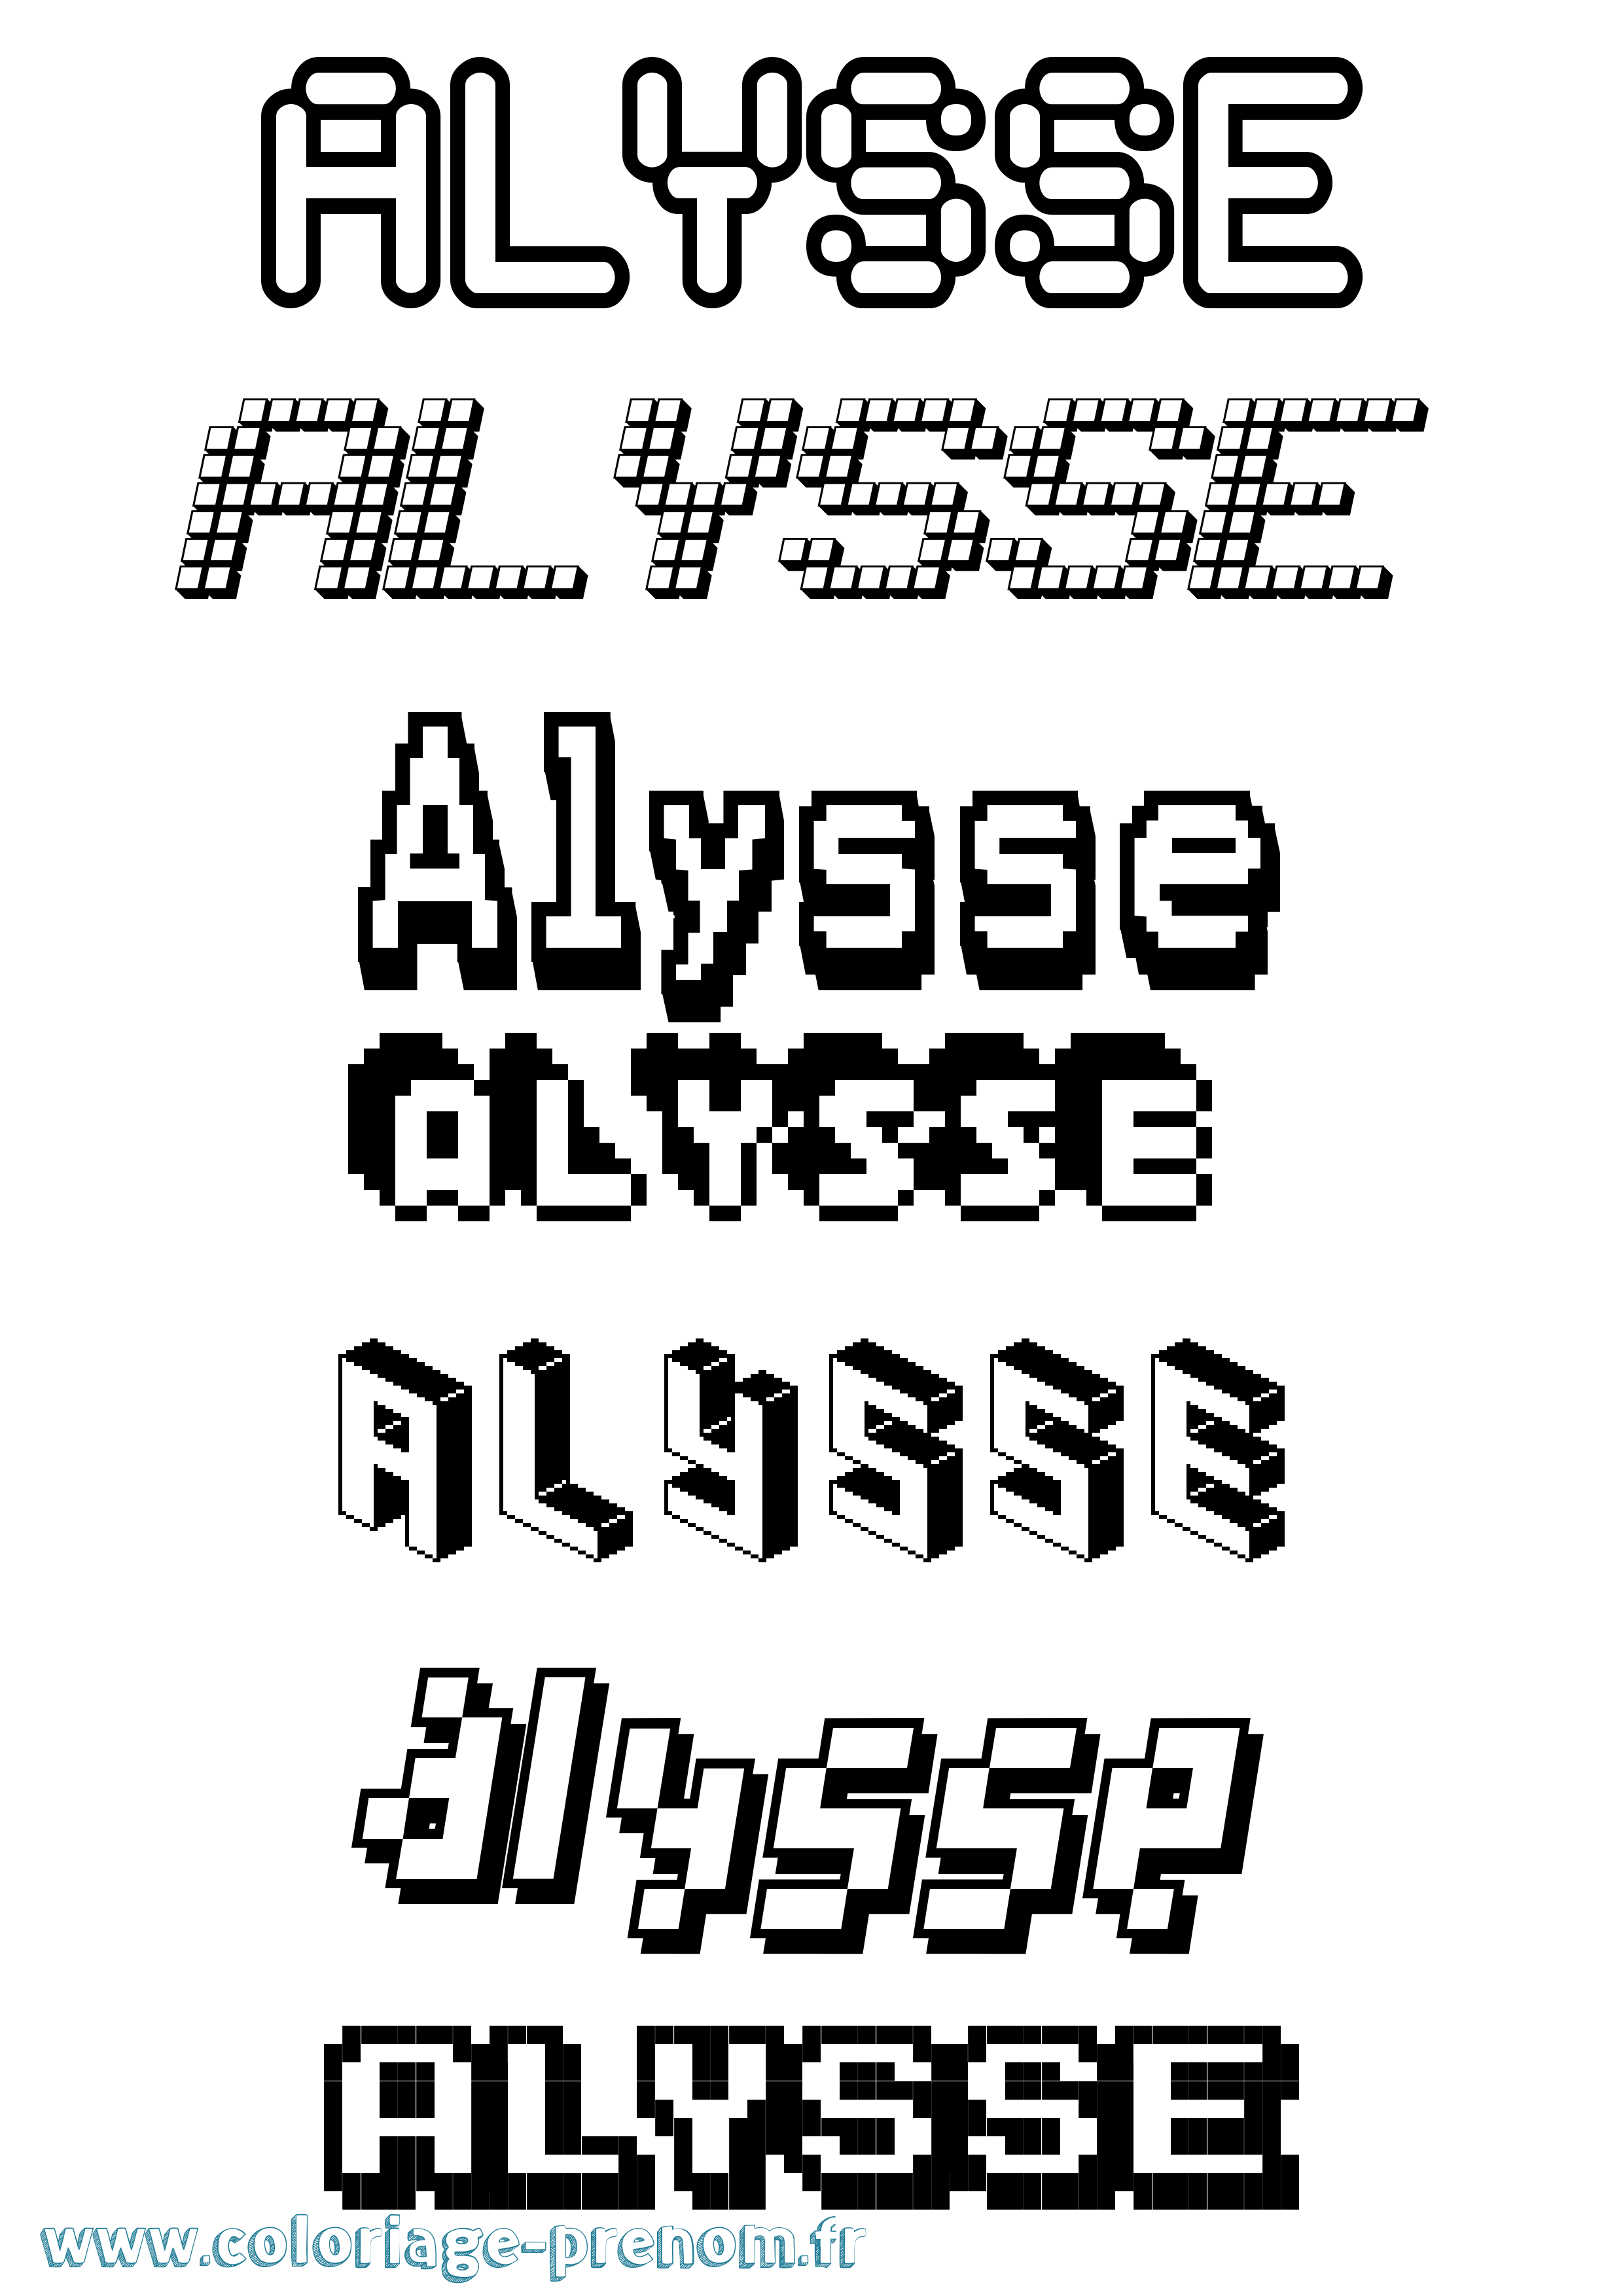 Coloriage prénom Alysse Pixel